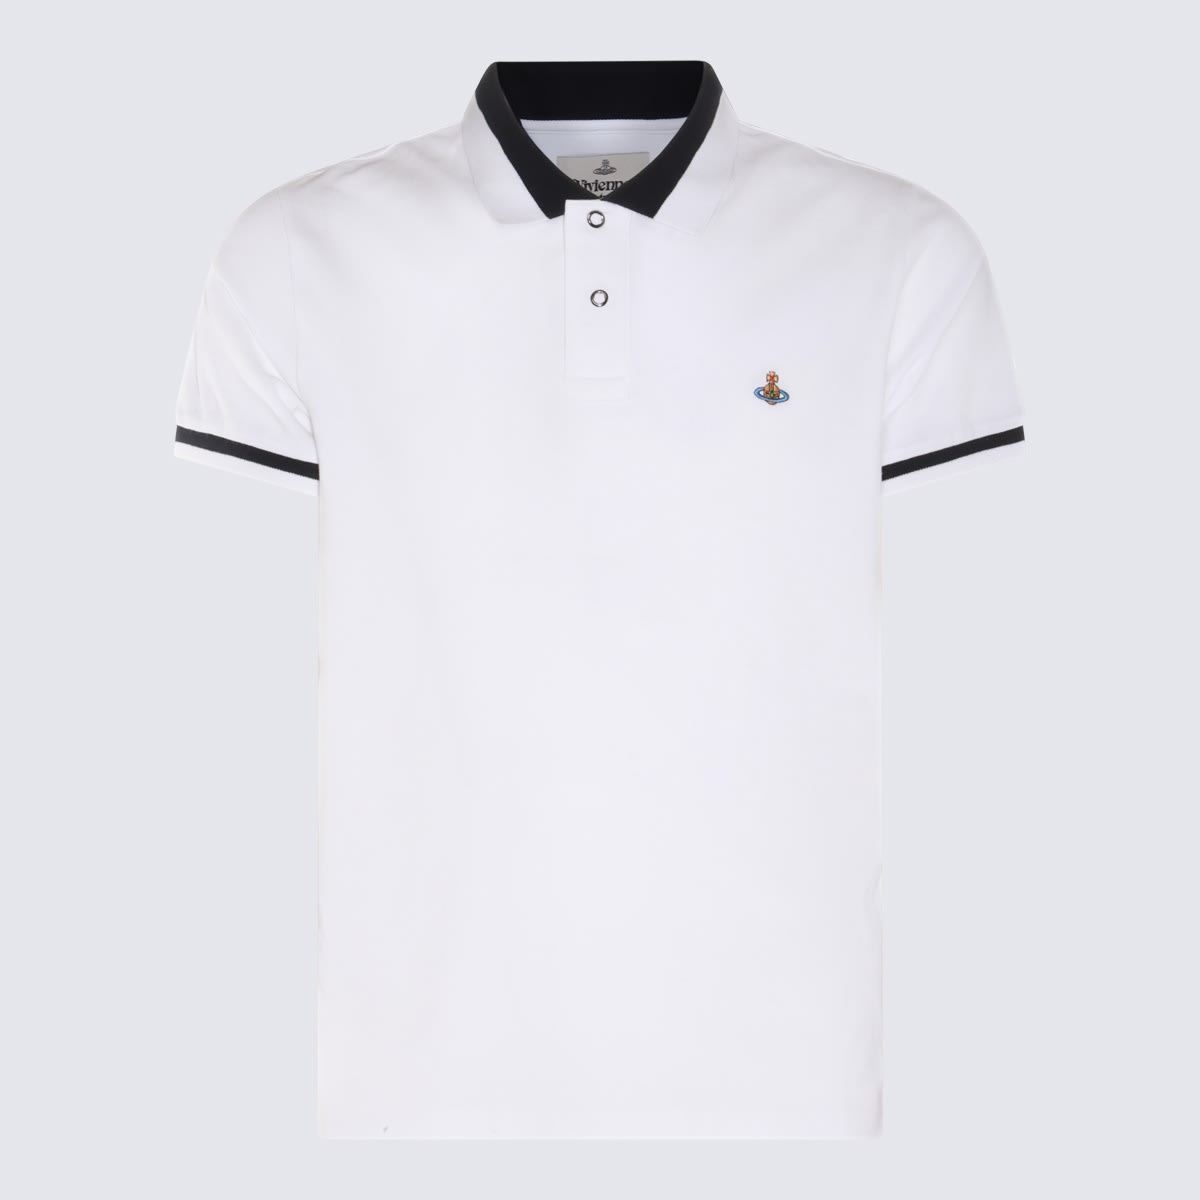 White And Black Cotton Polo Shirt